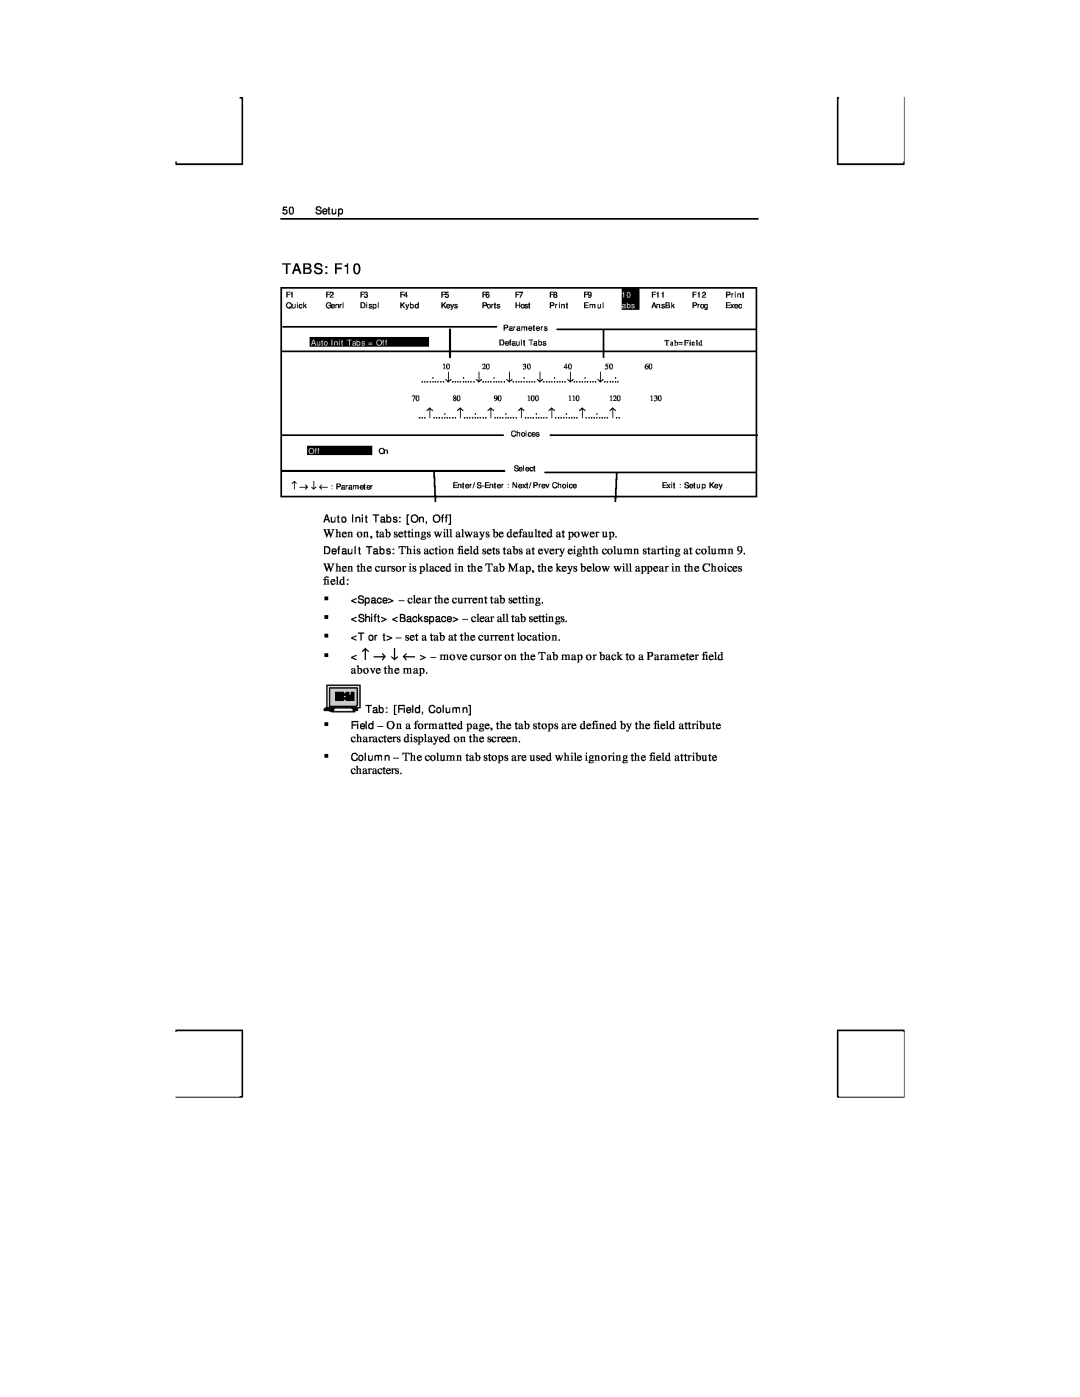 Boundless Technologies ADDS 3153 ASCII manual TABS F10 